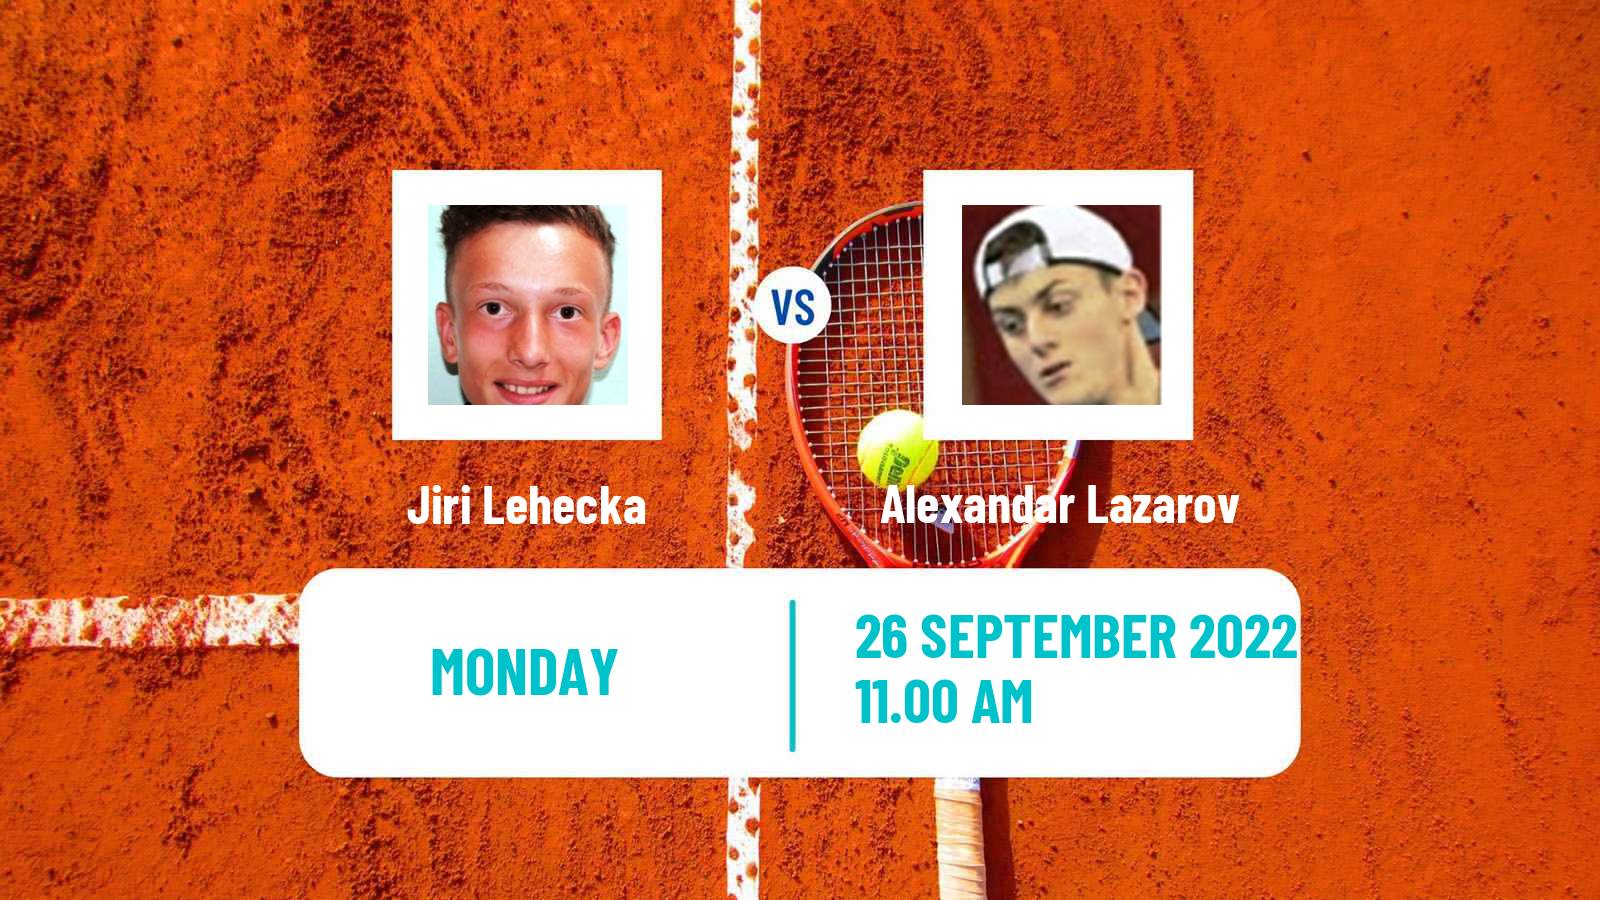 Tennis ATP Sofia Jiri Lehecka - Alexandar Lazarov